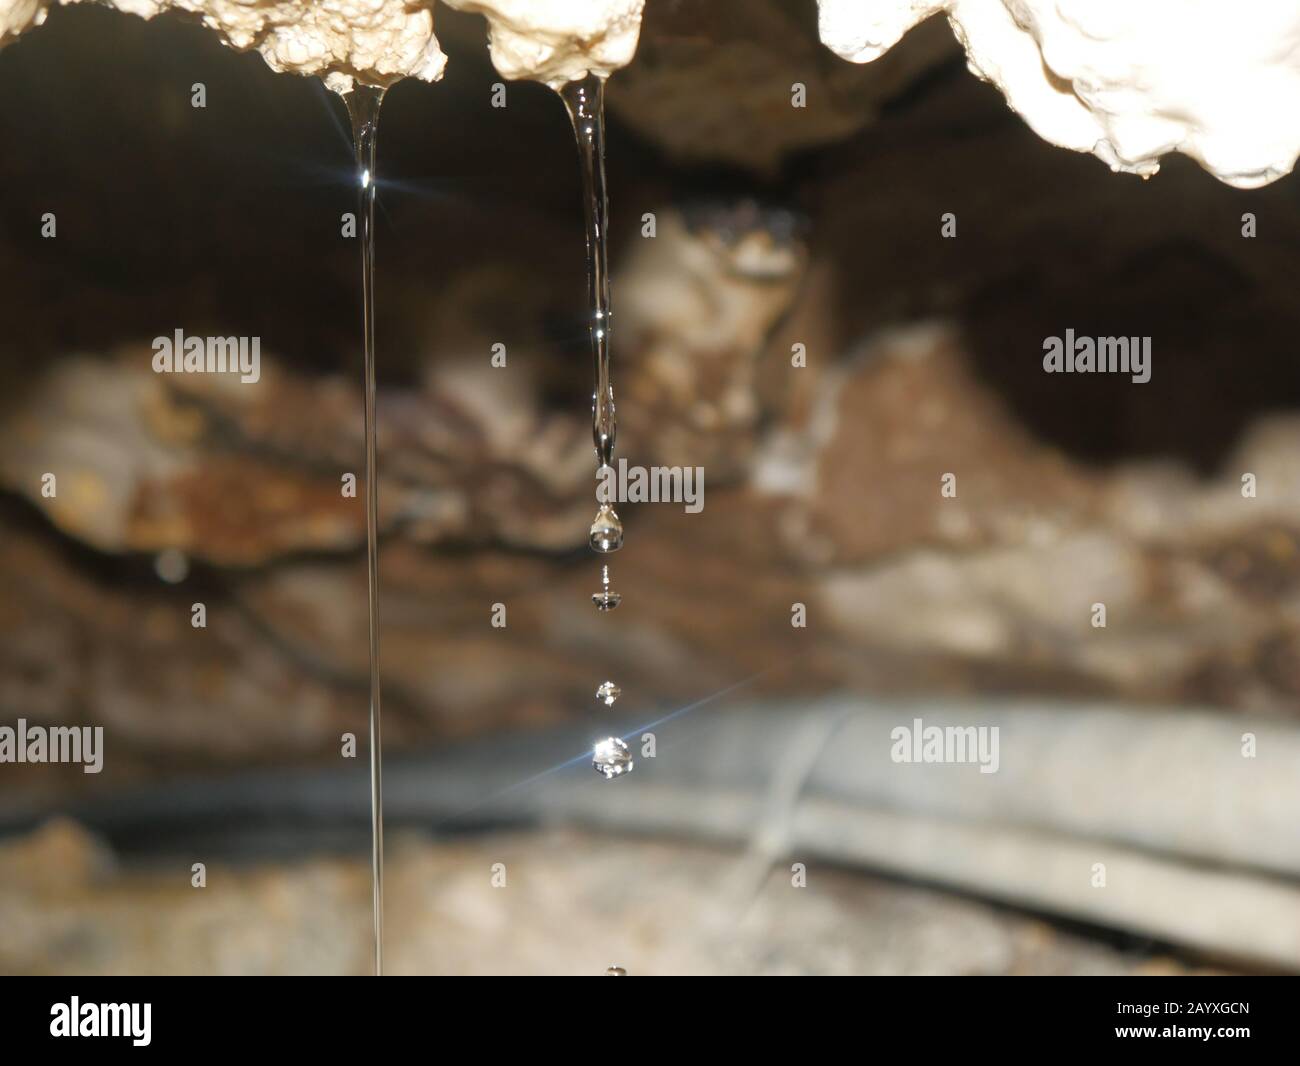 St. Beatus Cave, Switzerland: A water drop falling Stock Photo